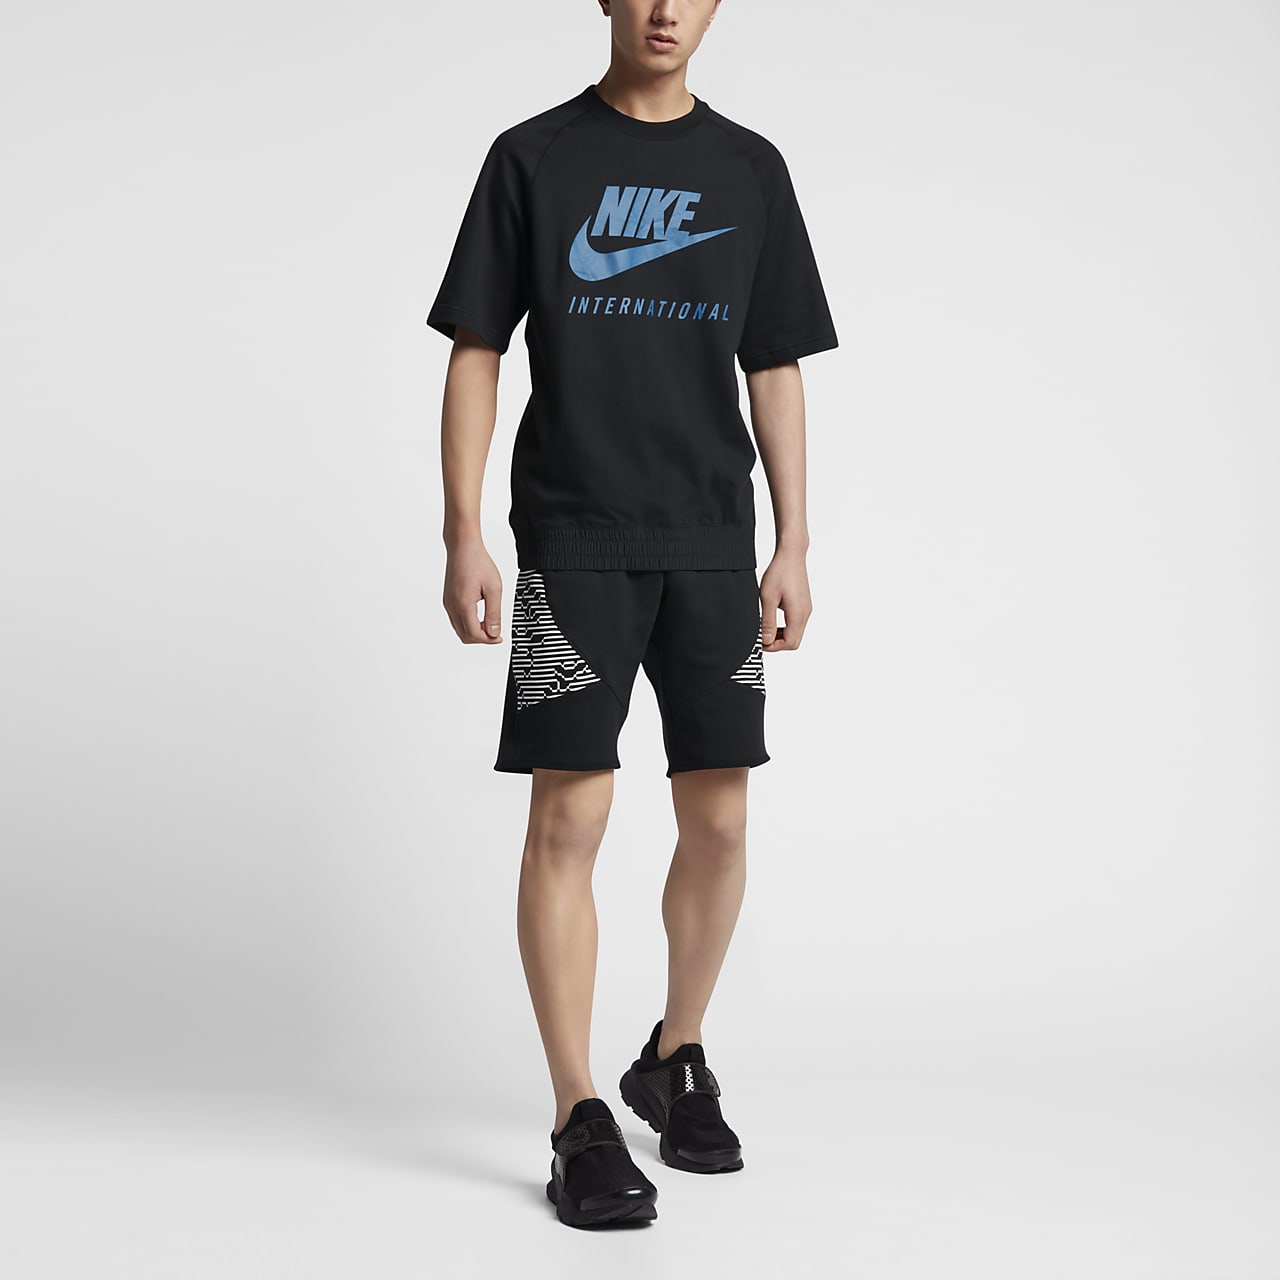 Nike Crew Men's T-Shirt. ID